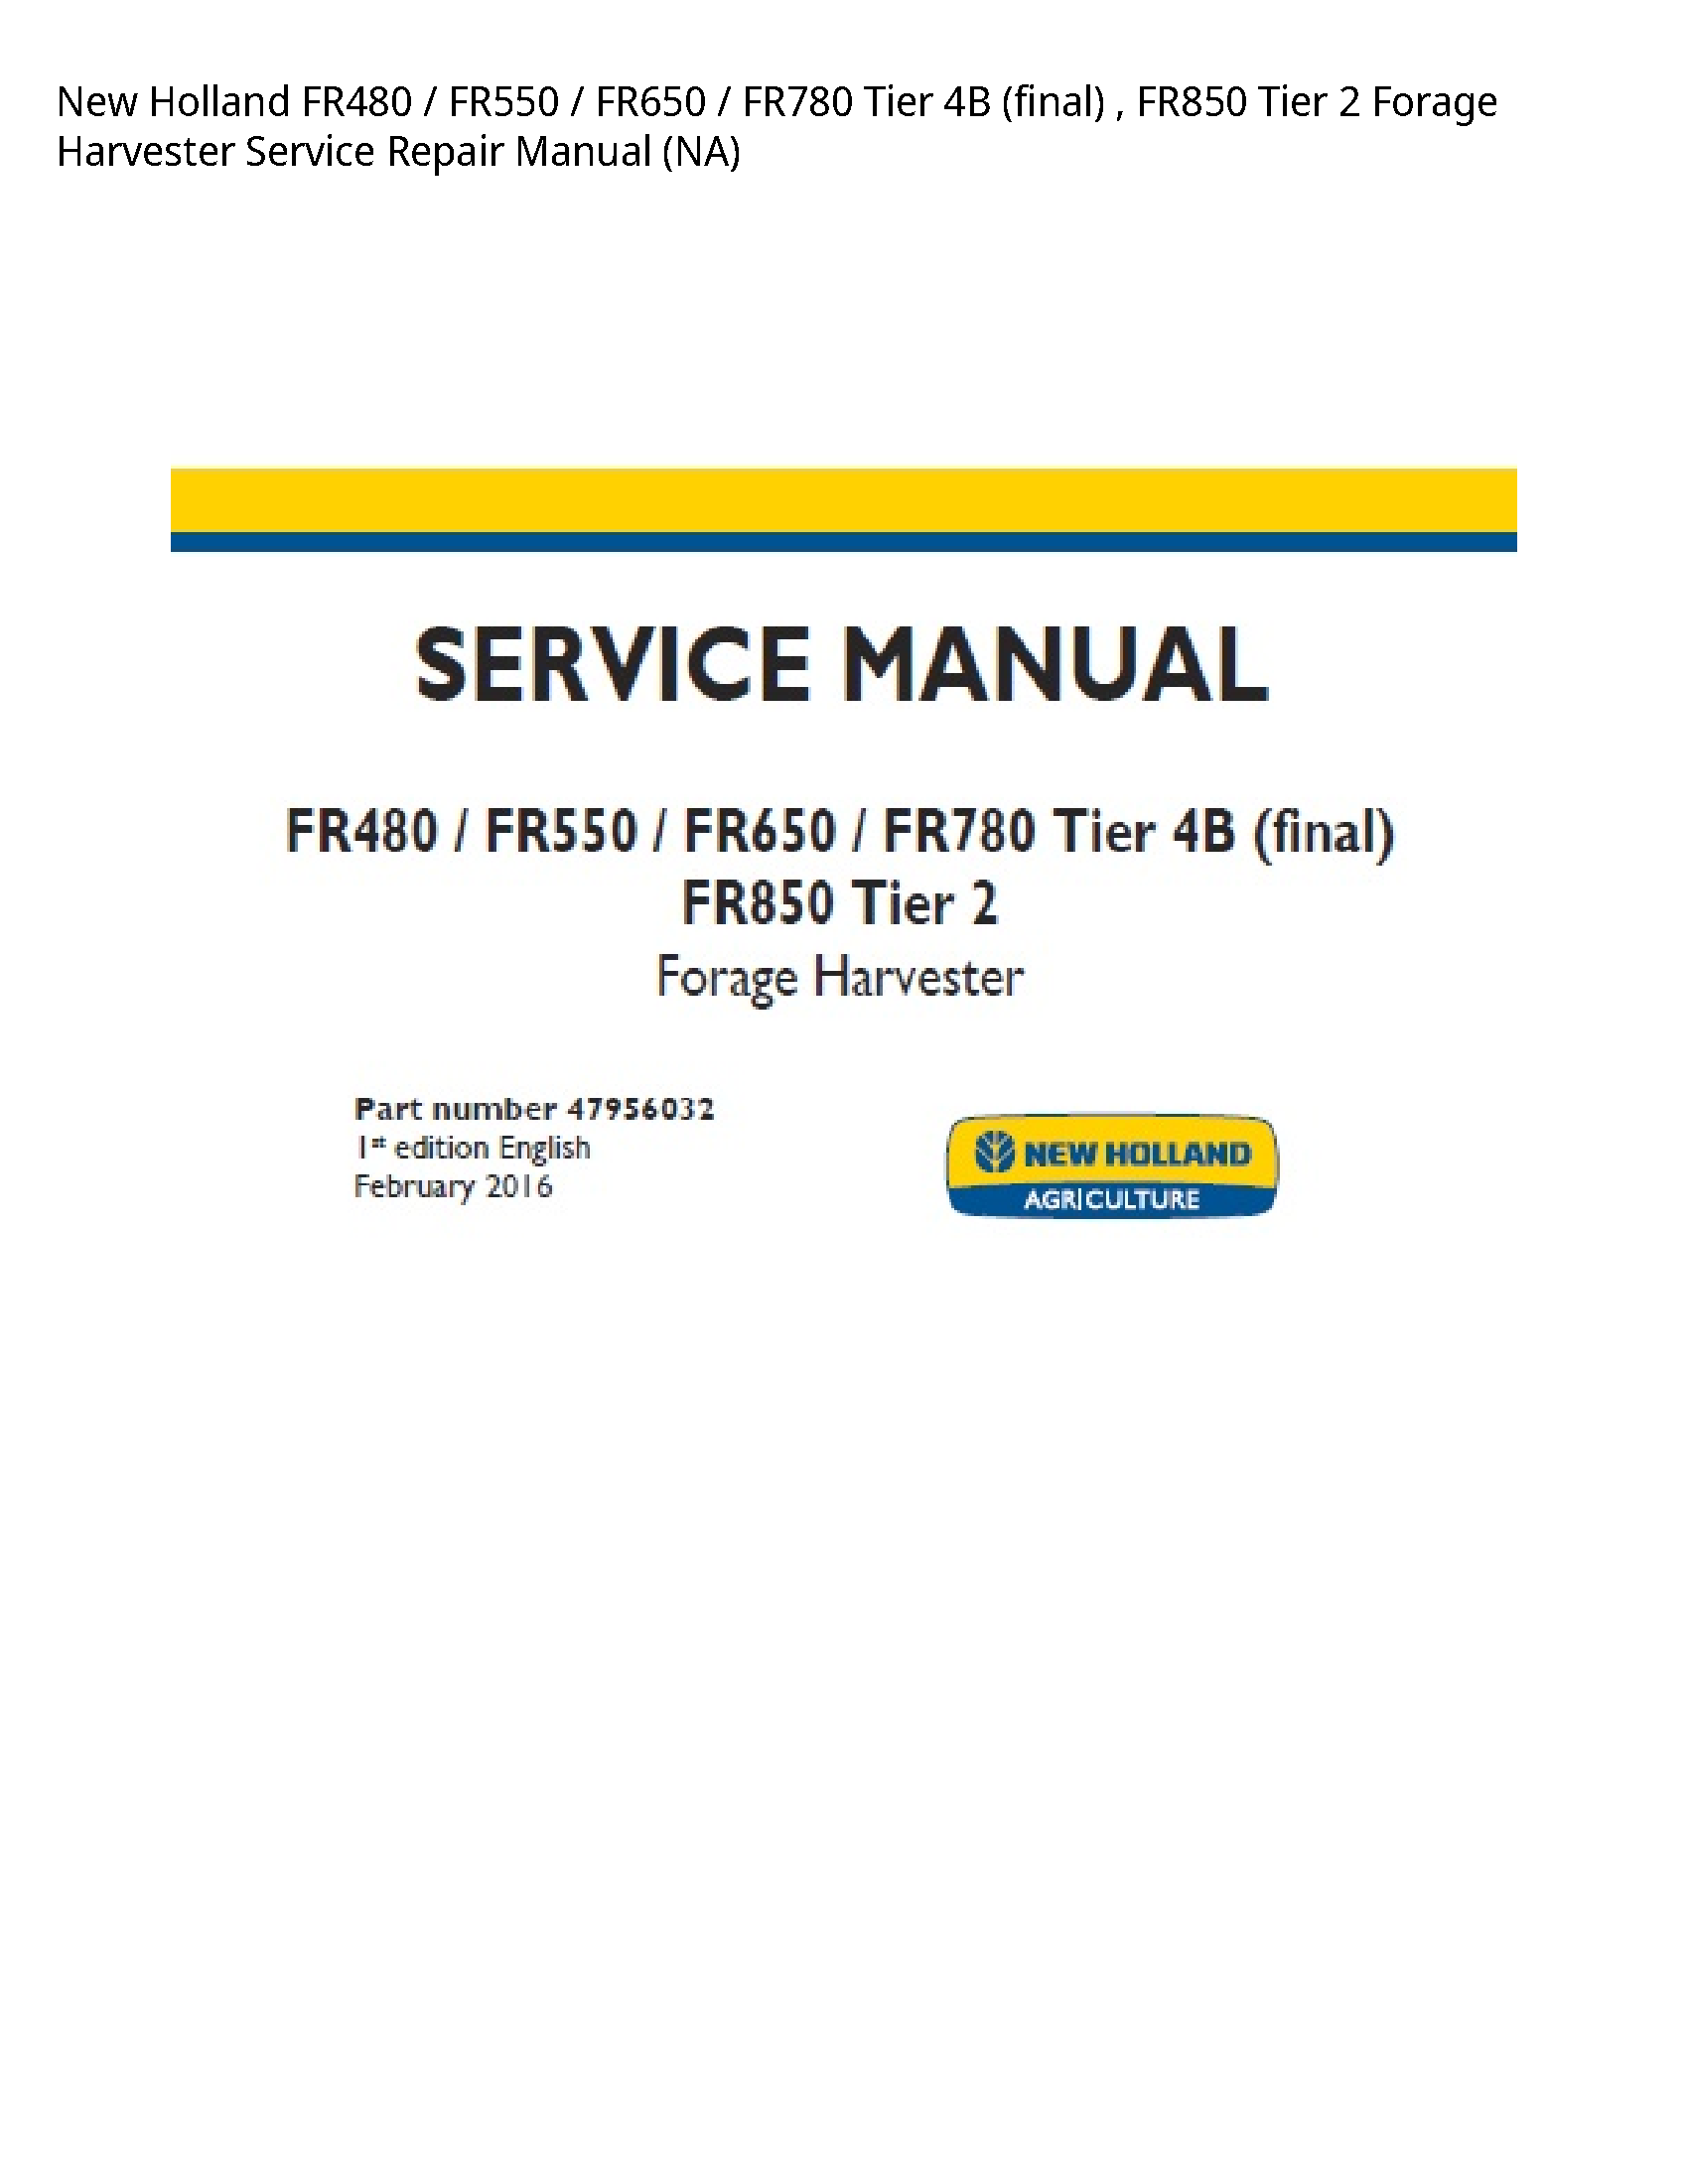 New Holland FR480 Tier (final) Tier Forage Harvester manual